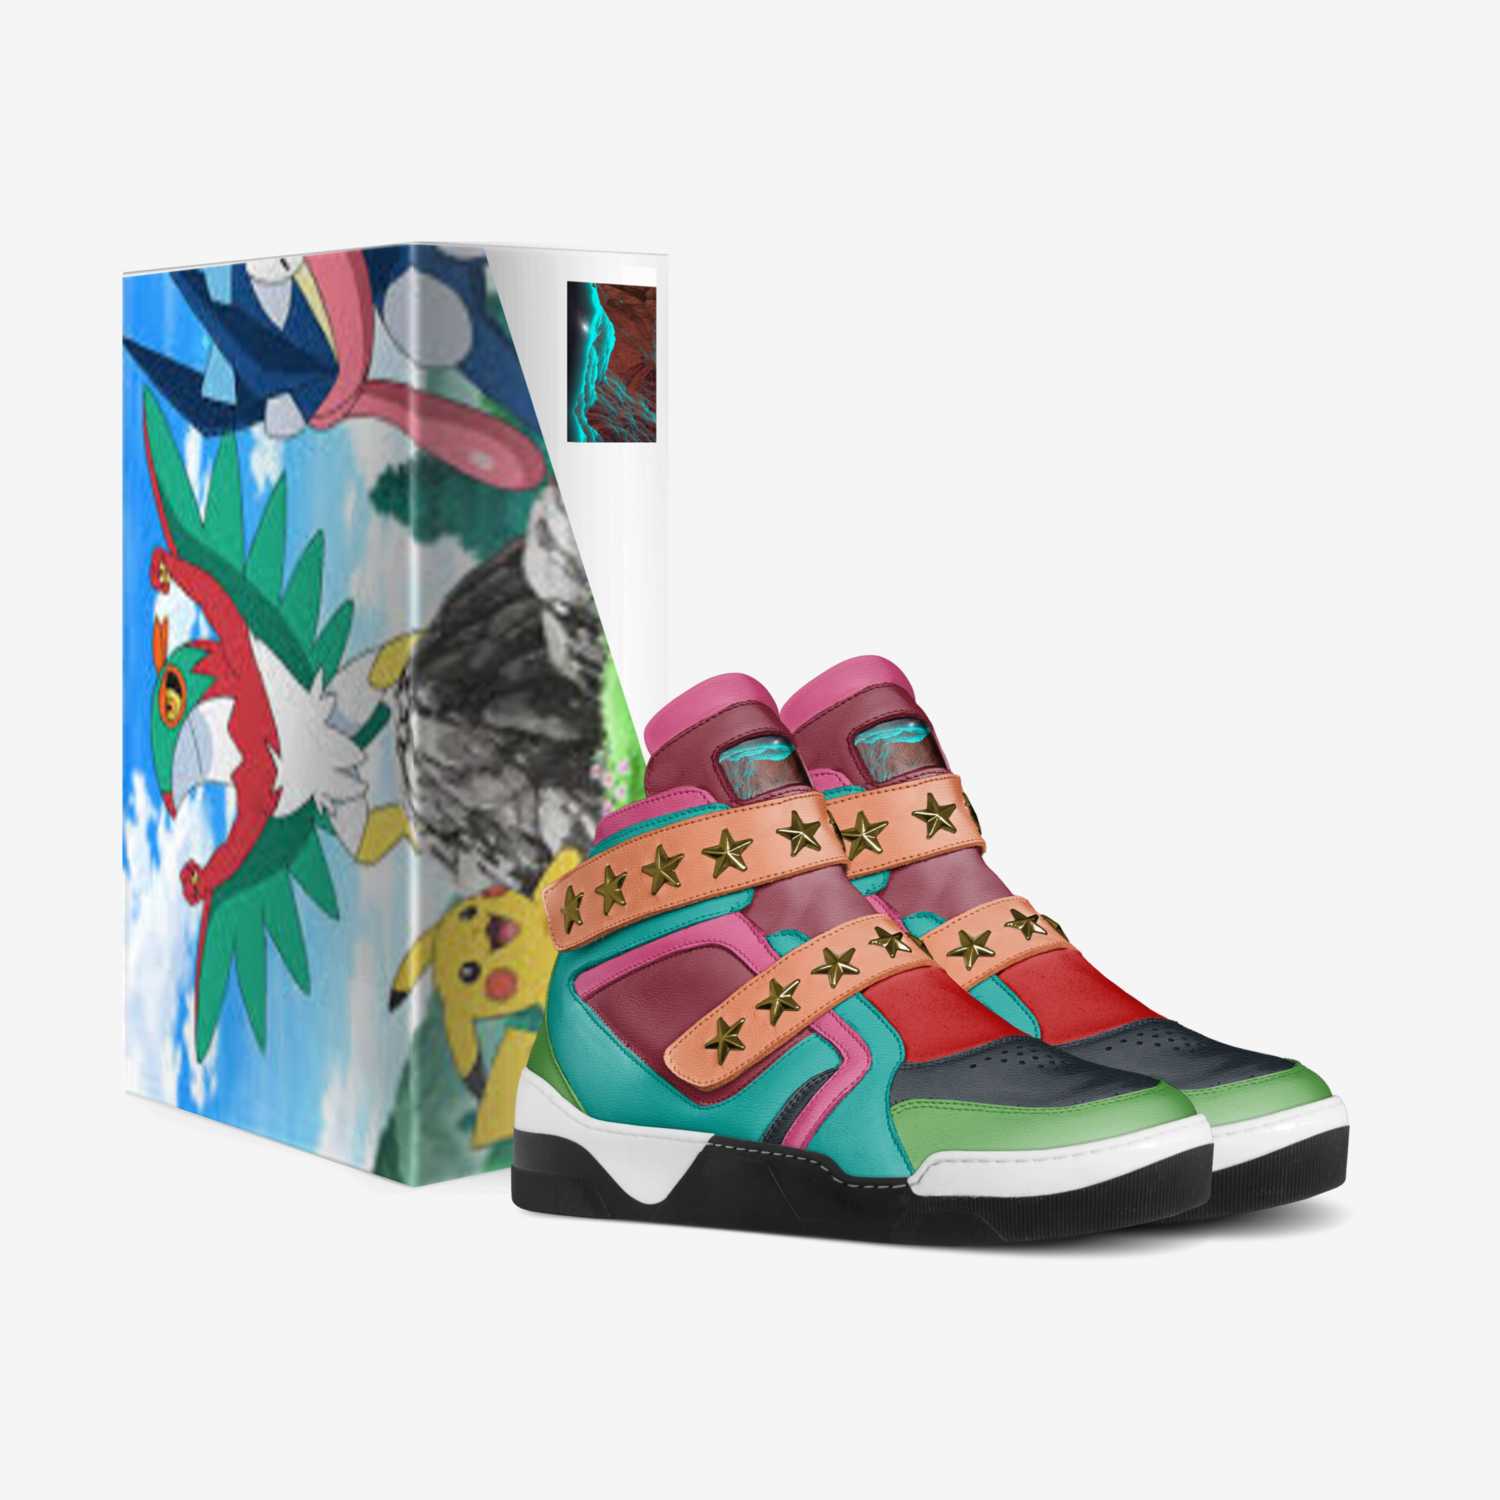 lake side ninjas custom made in Italy shoes by Elijah Mravlag | Box view